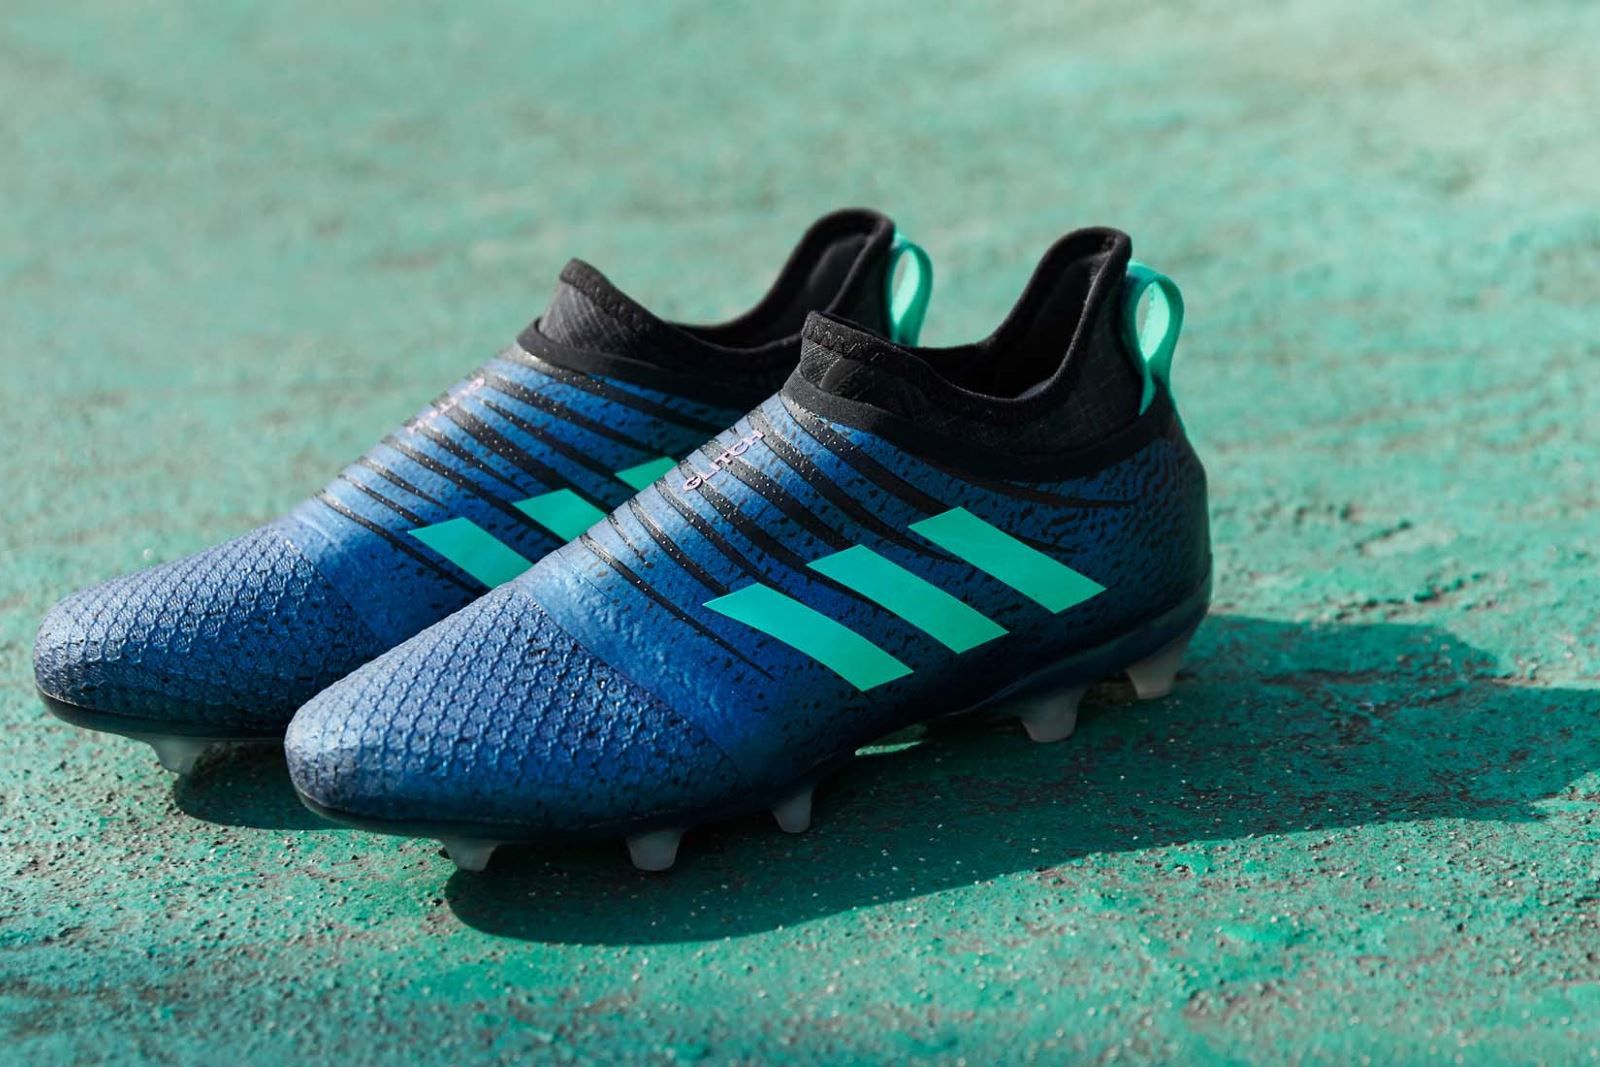 namens stilte Te We speak to the designer of Adidas' interchangeable skin football boots